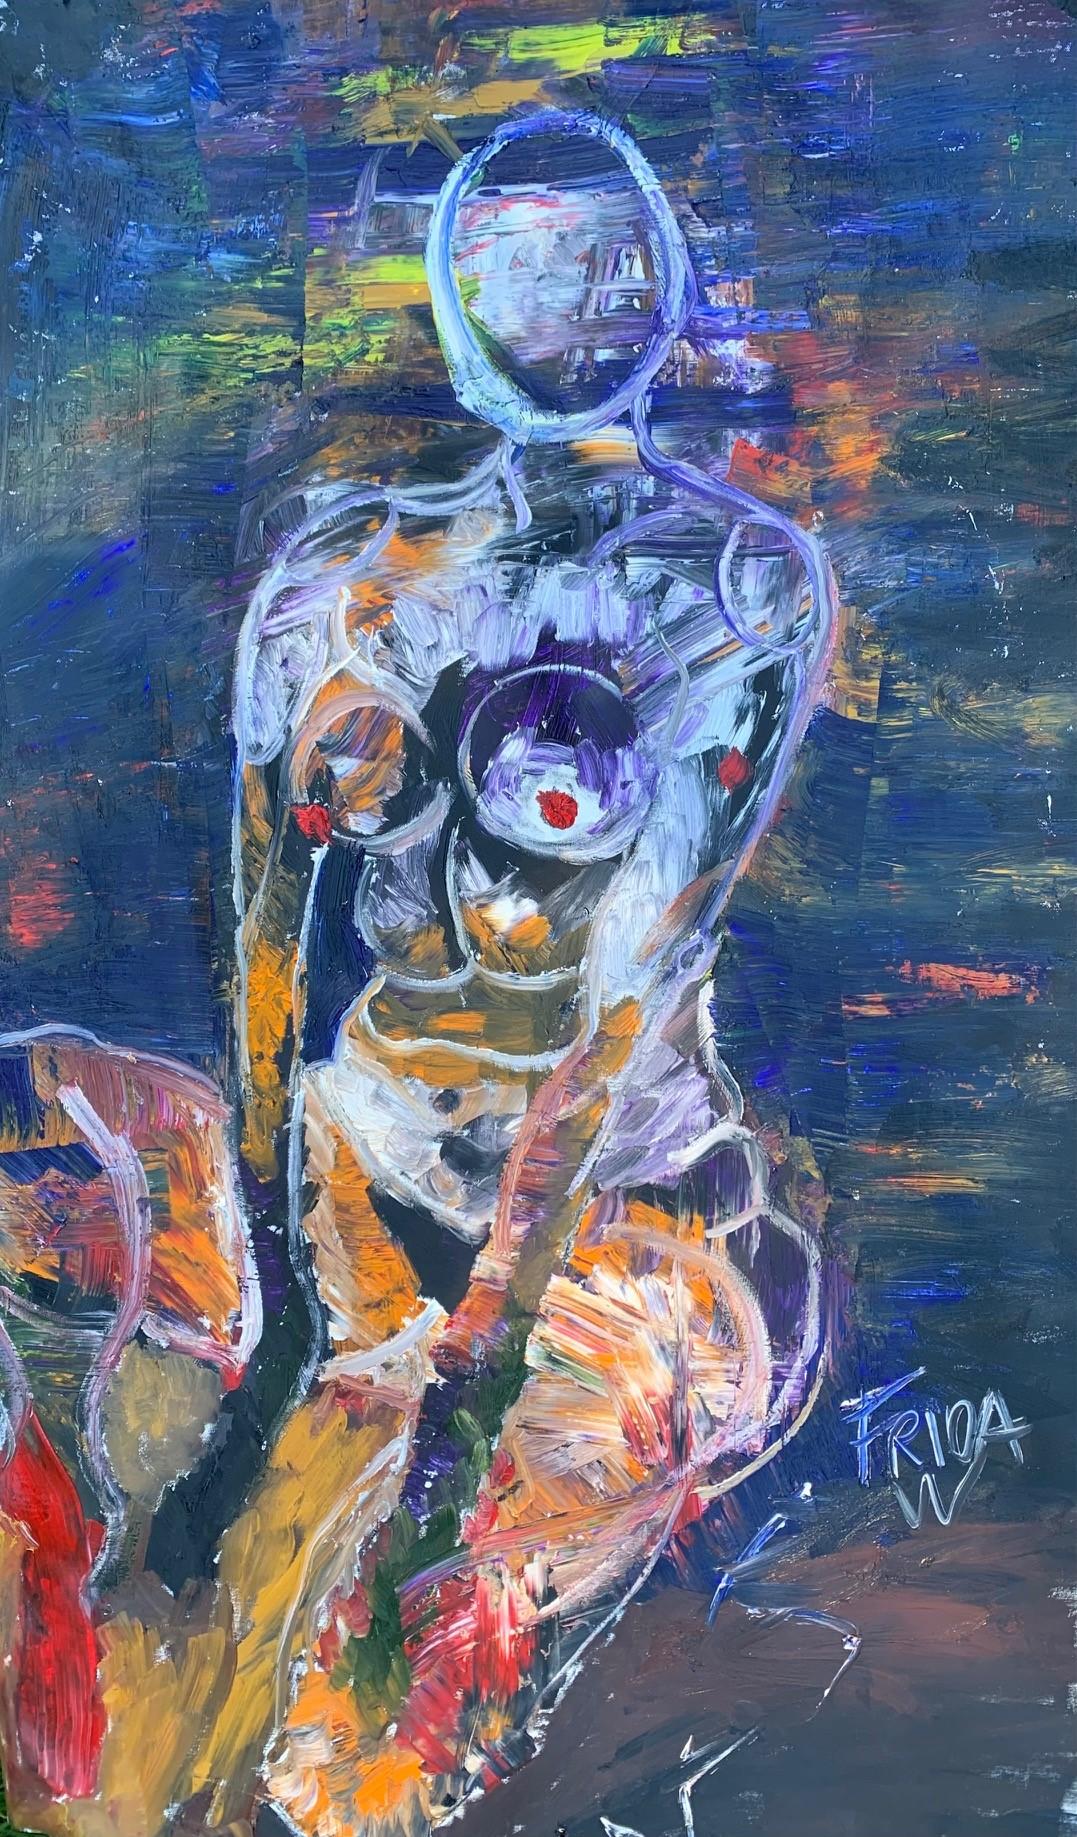 Abstract Painting Frida Willis - Art figuratif - « Femme nue » - Peinture contemporaine - Huile sur toile